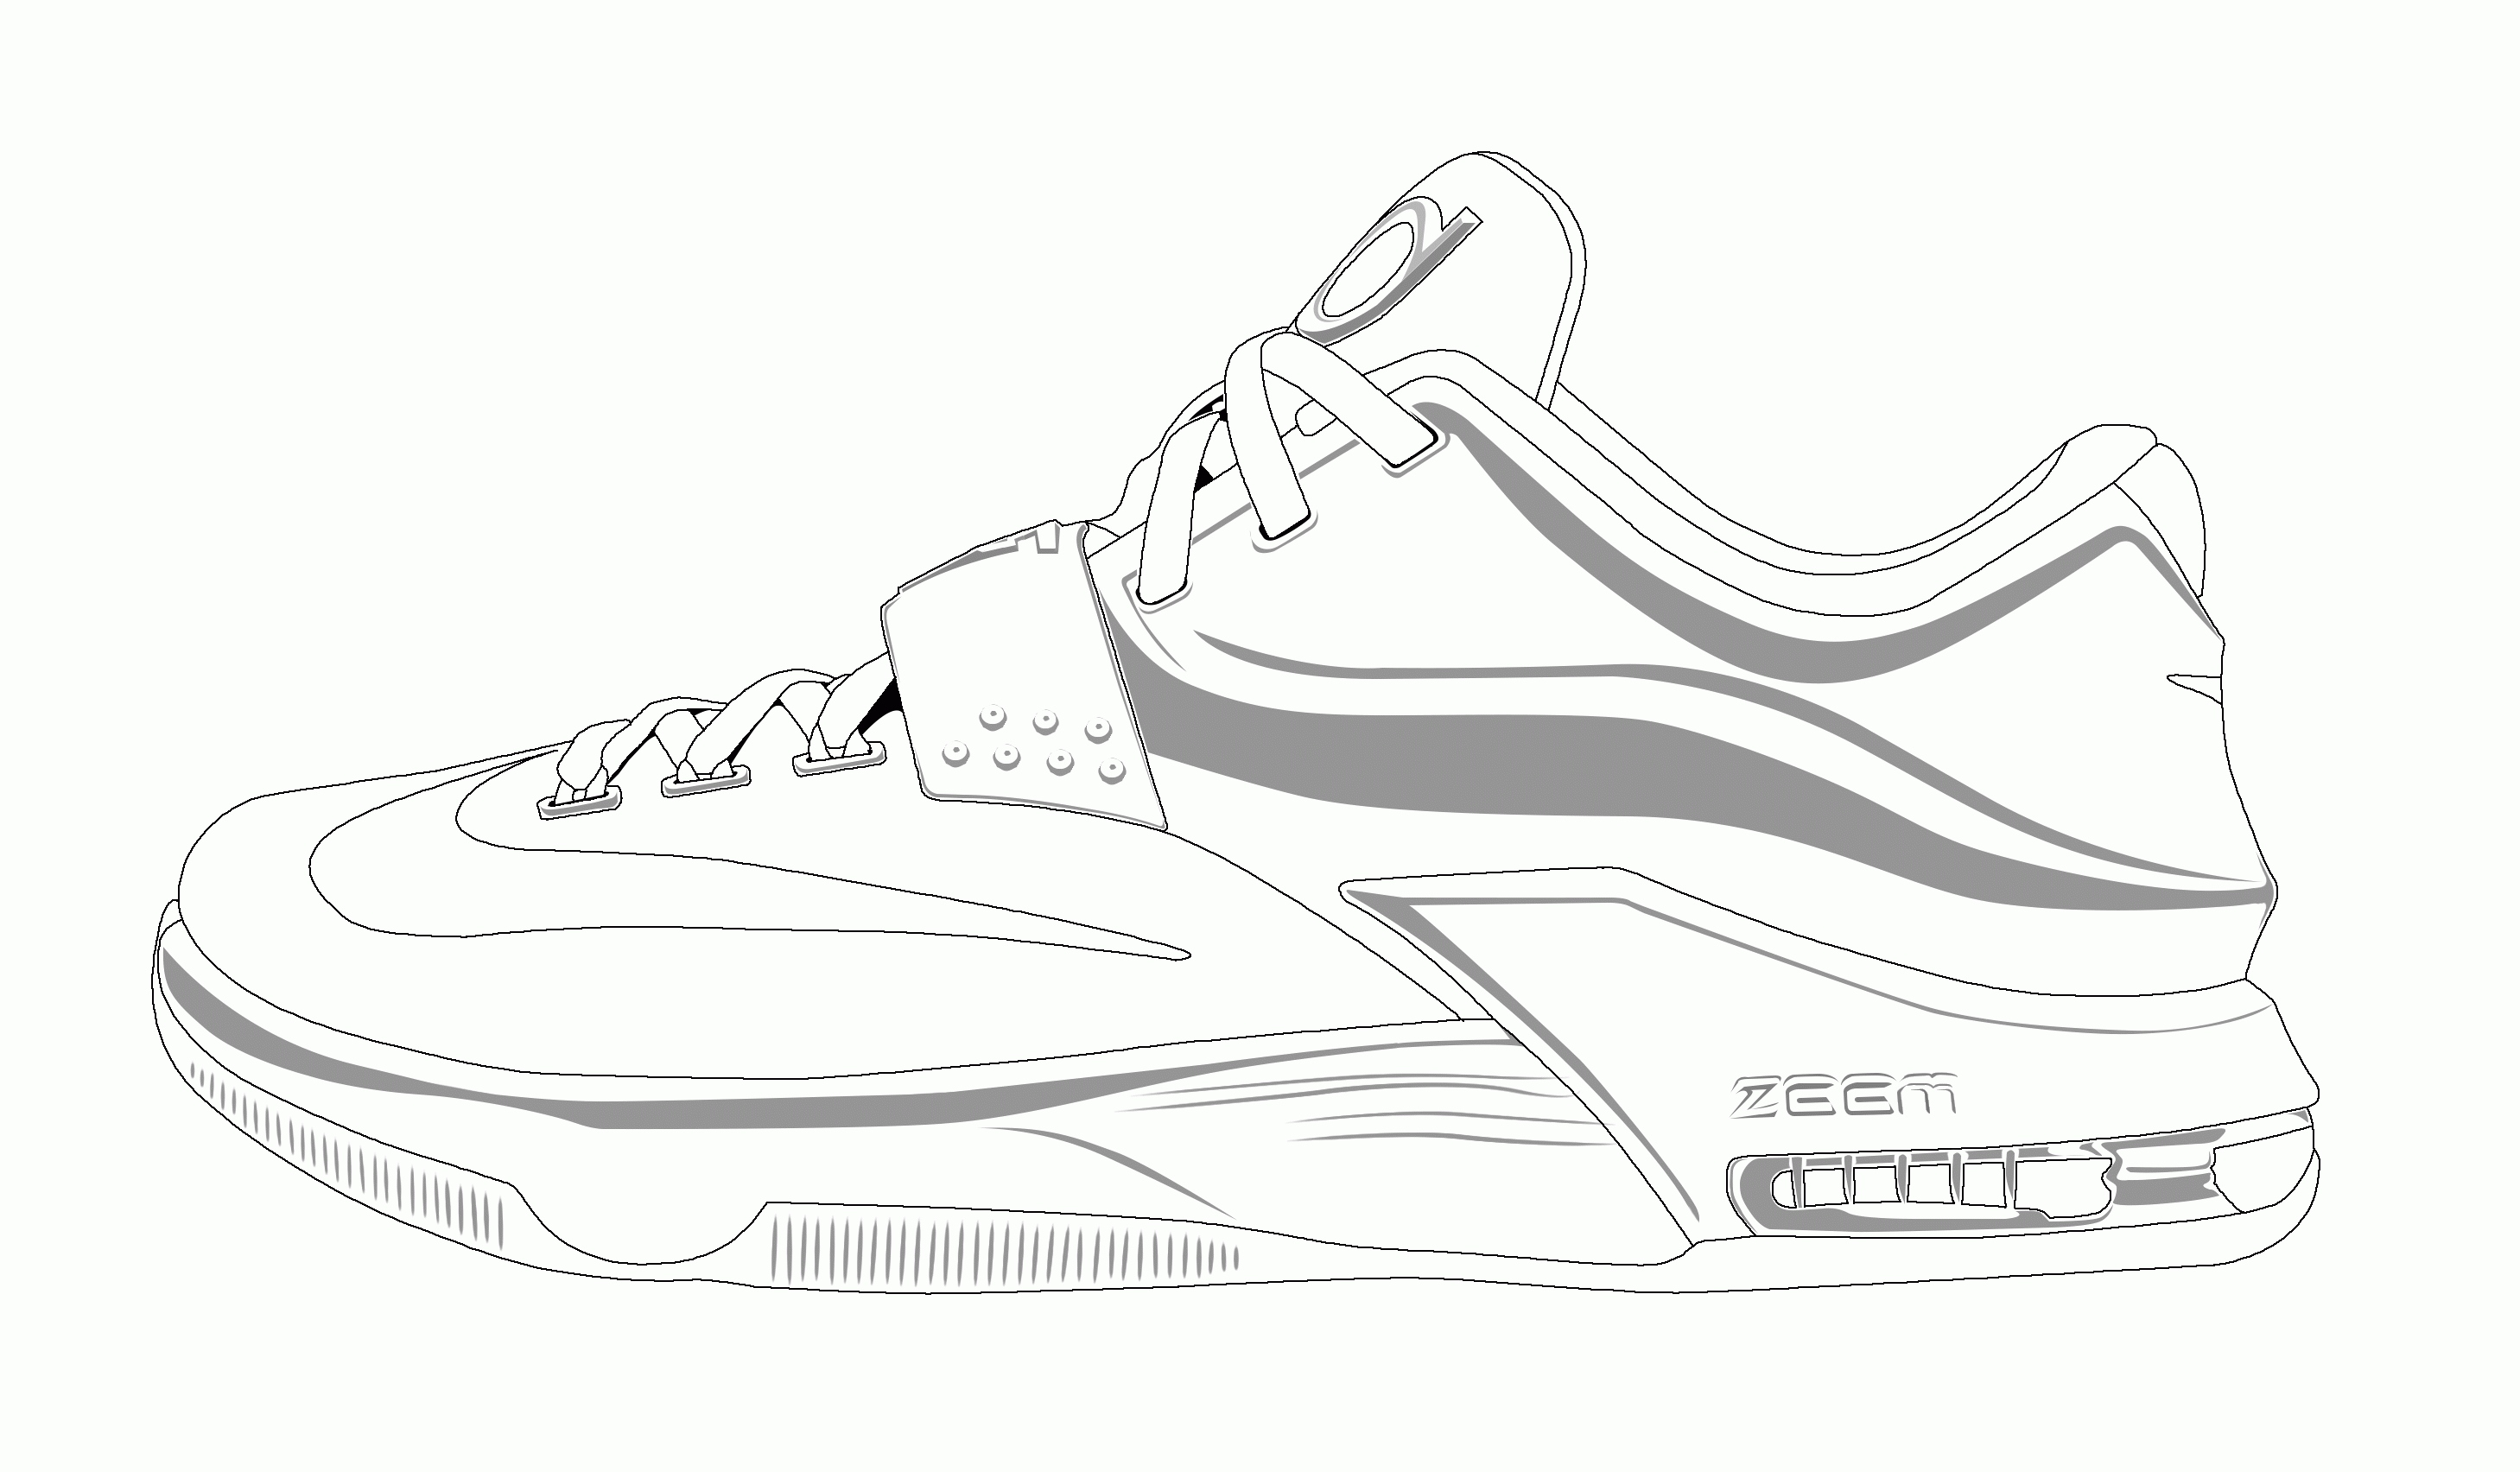 Jordan Shoes Coloring Pages at GetColorings.com | Free printable